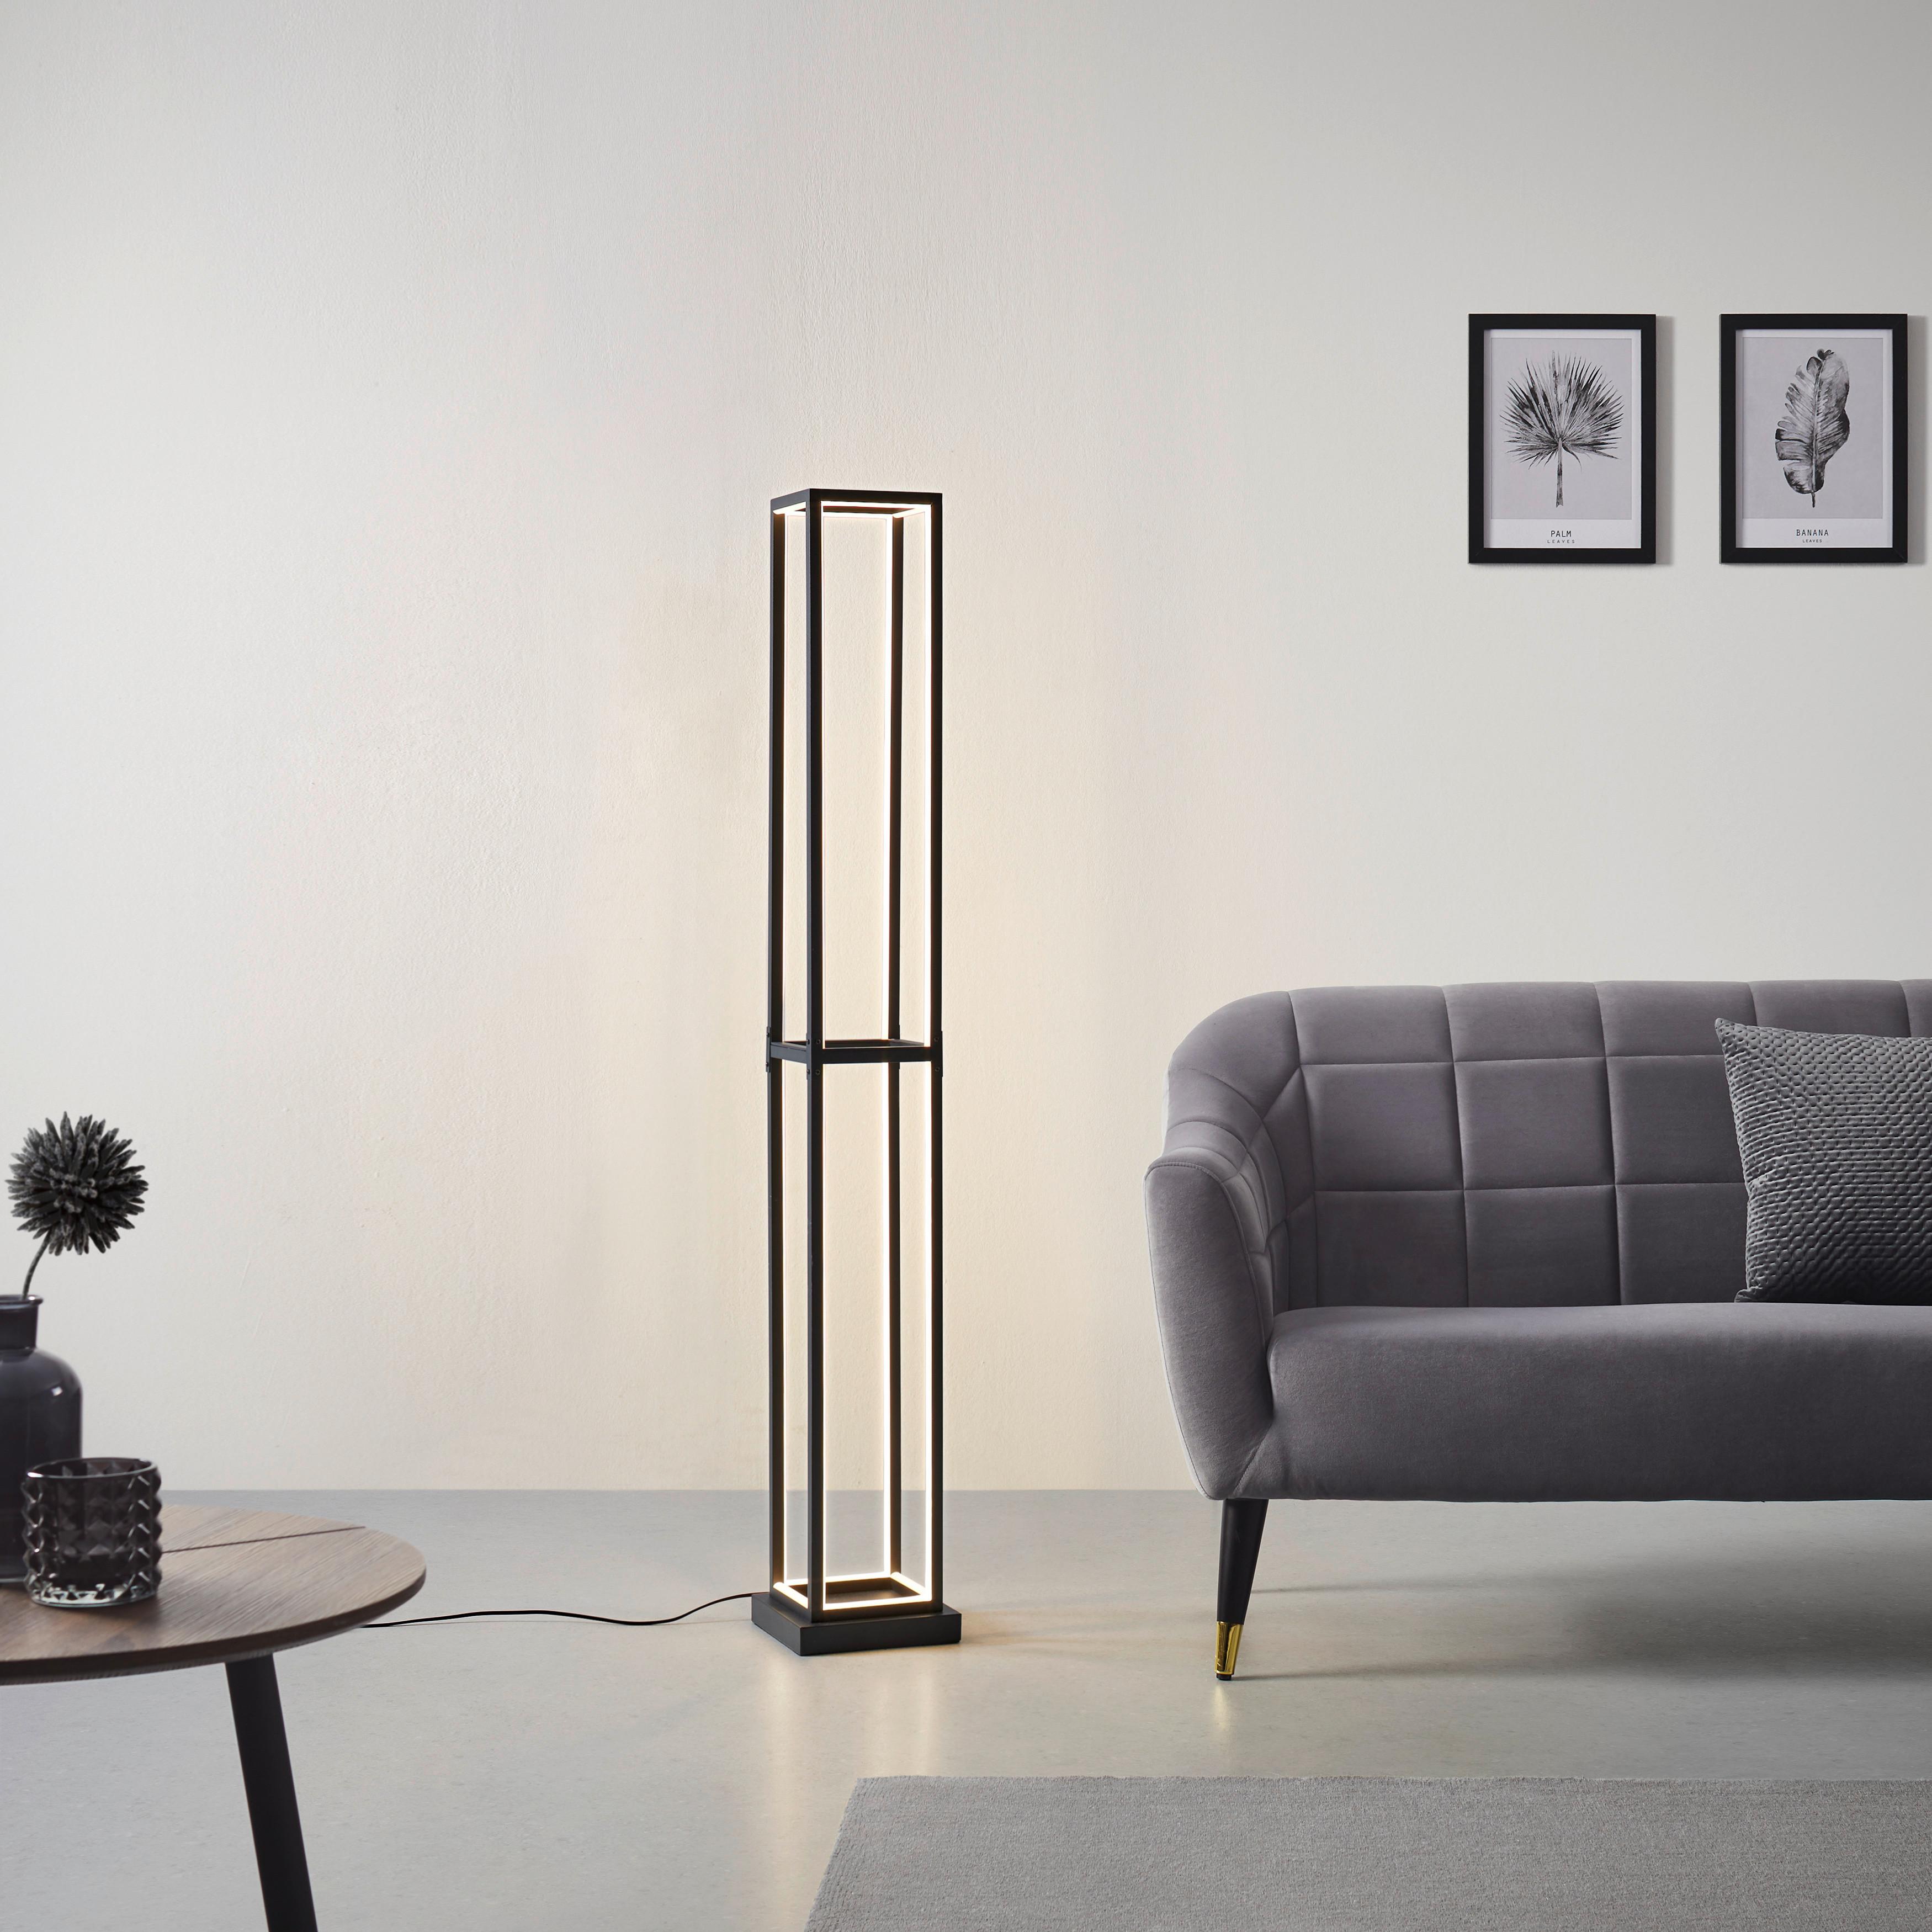 Led-stojaca Lampa Max. 1,34 Watt - čierna, Moderný, kov/plast (22/22/150cm) - Bessagi Home